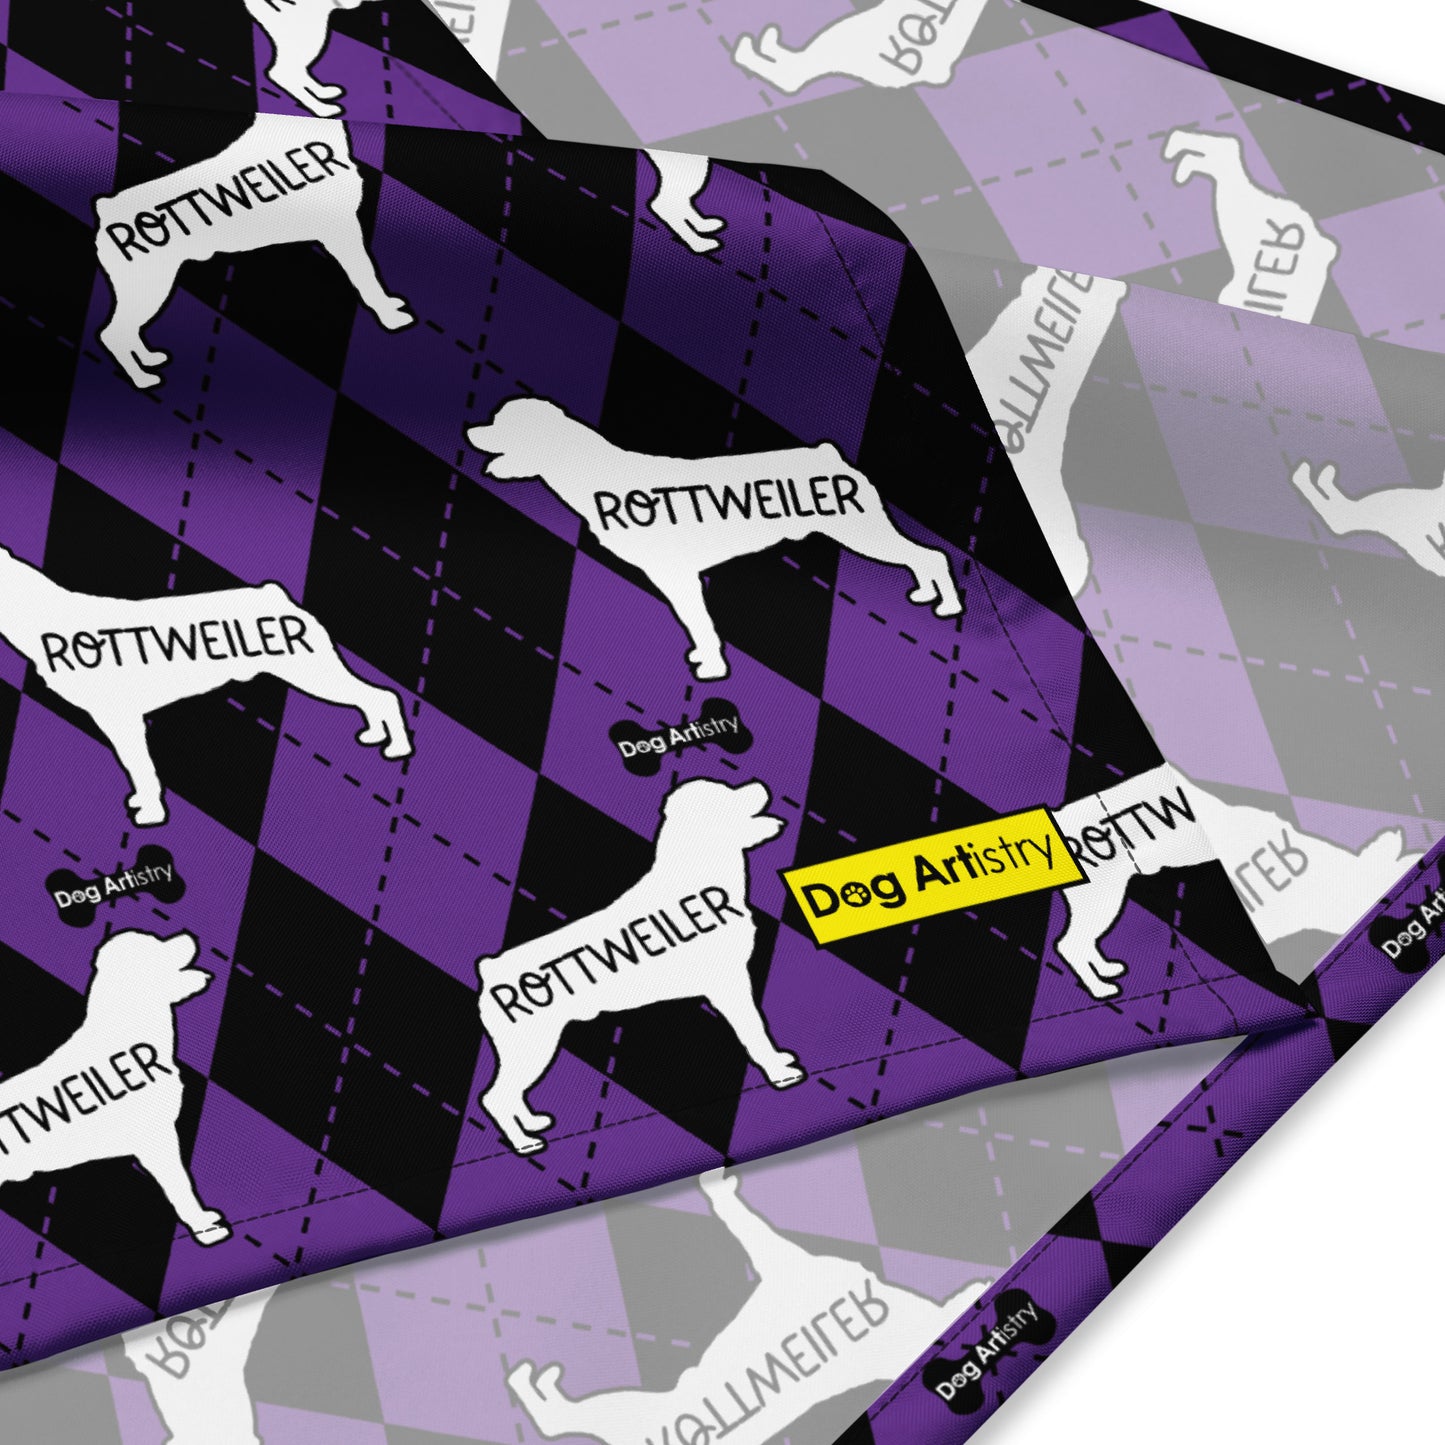 Rottweiler Argyle Purple and Black All-over print bandana